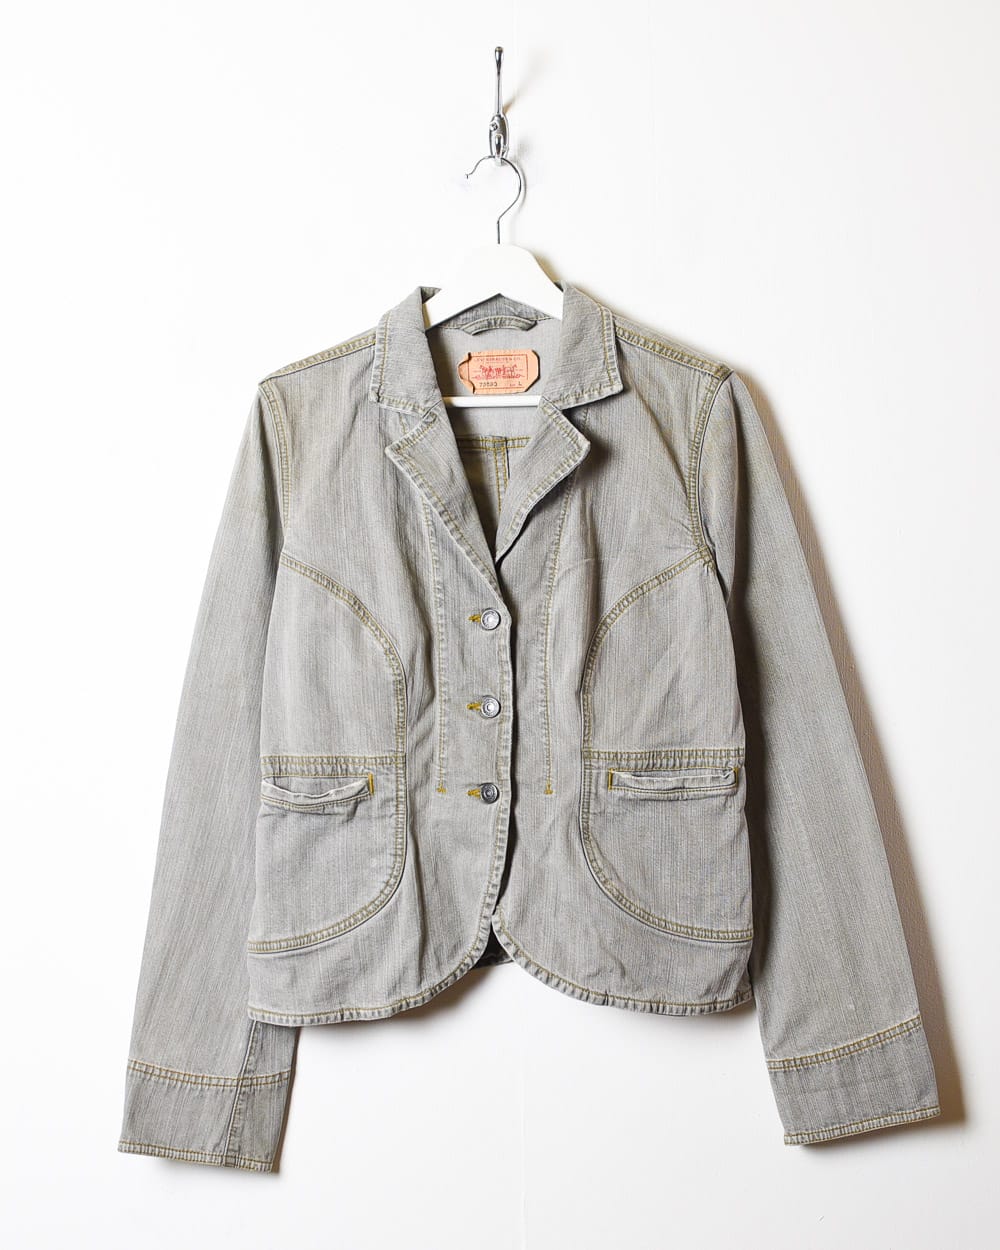 Grey Levi's Denim Dress Jacket - Medium Women's